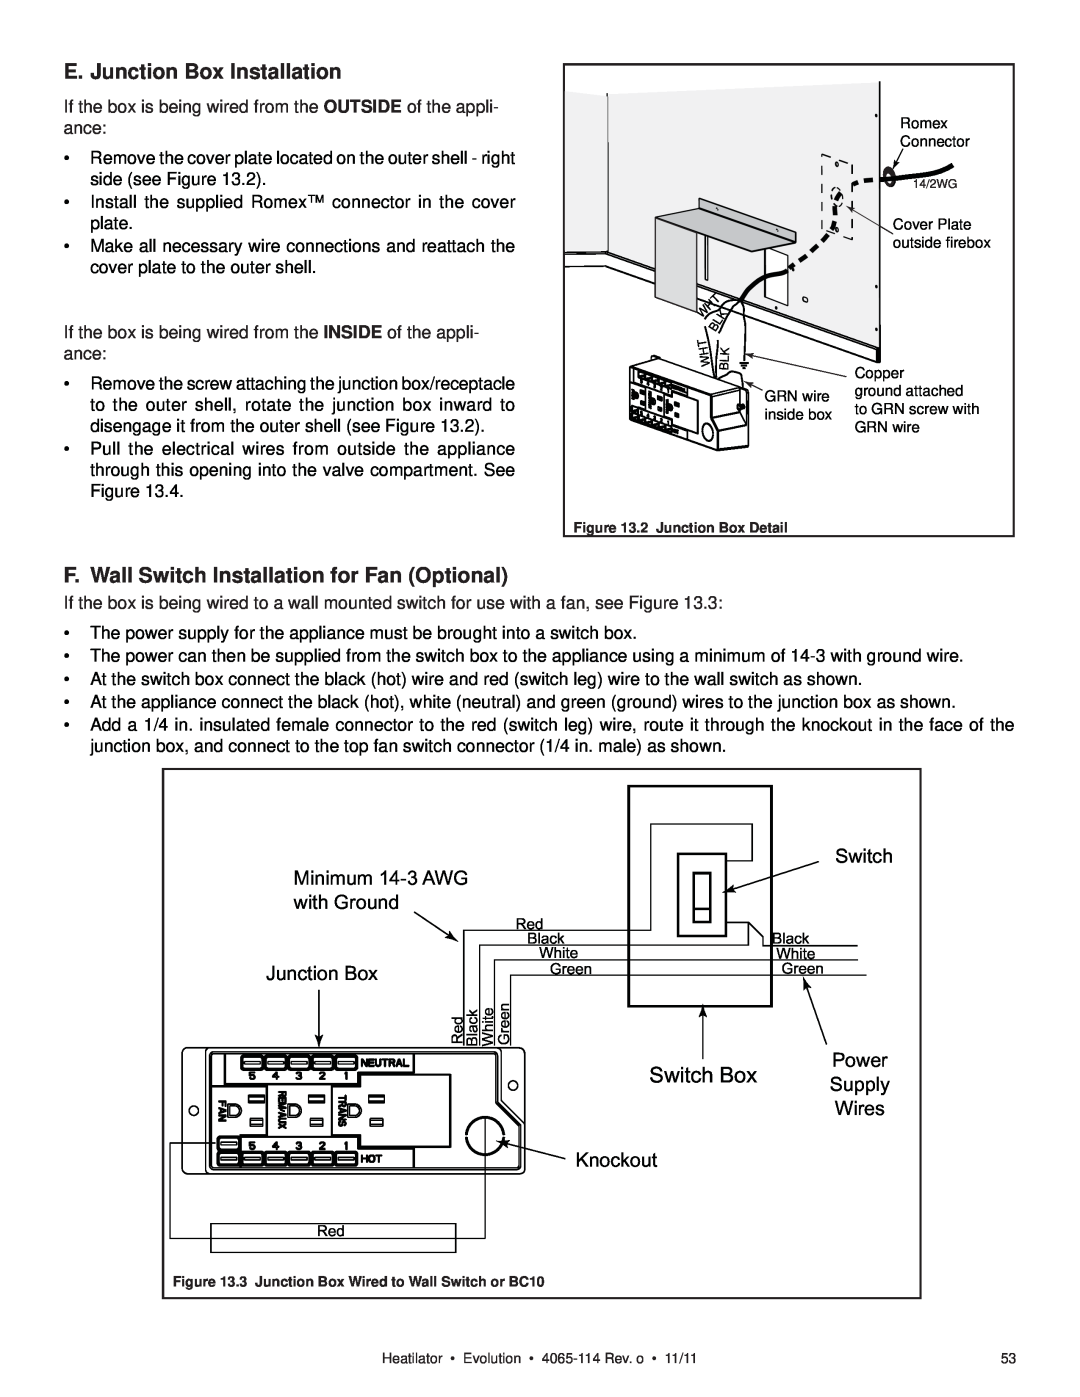 Heatiator NEVO4236I NEVO3630I E. Junction Box Installation, F. Wall Switch Installation for Fan Optional, Minimum 14-3AWG 